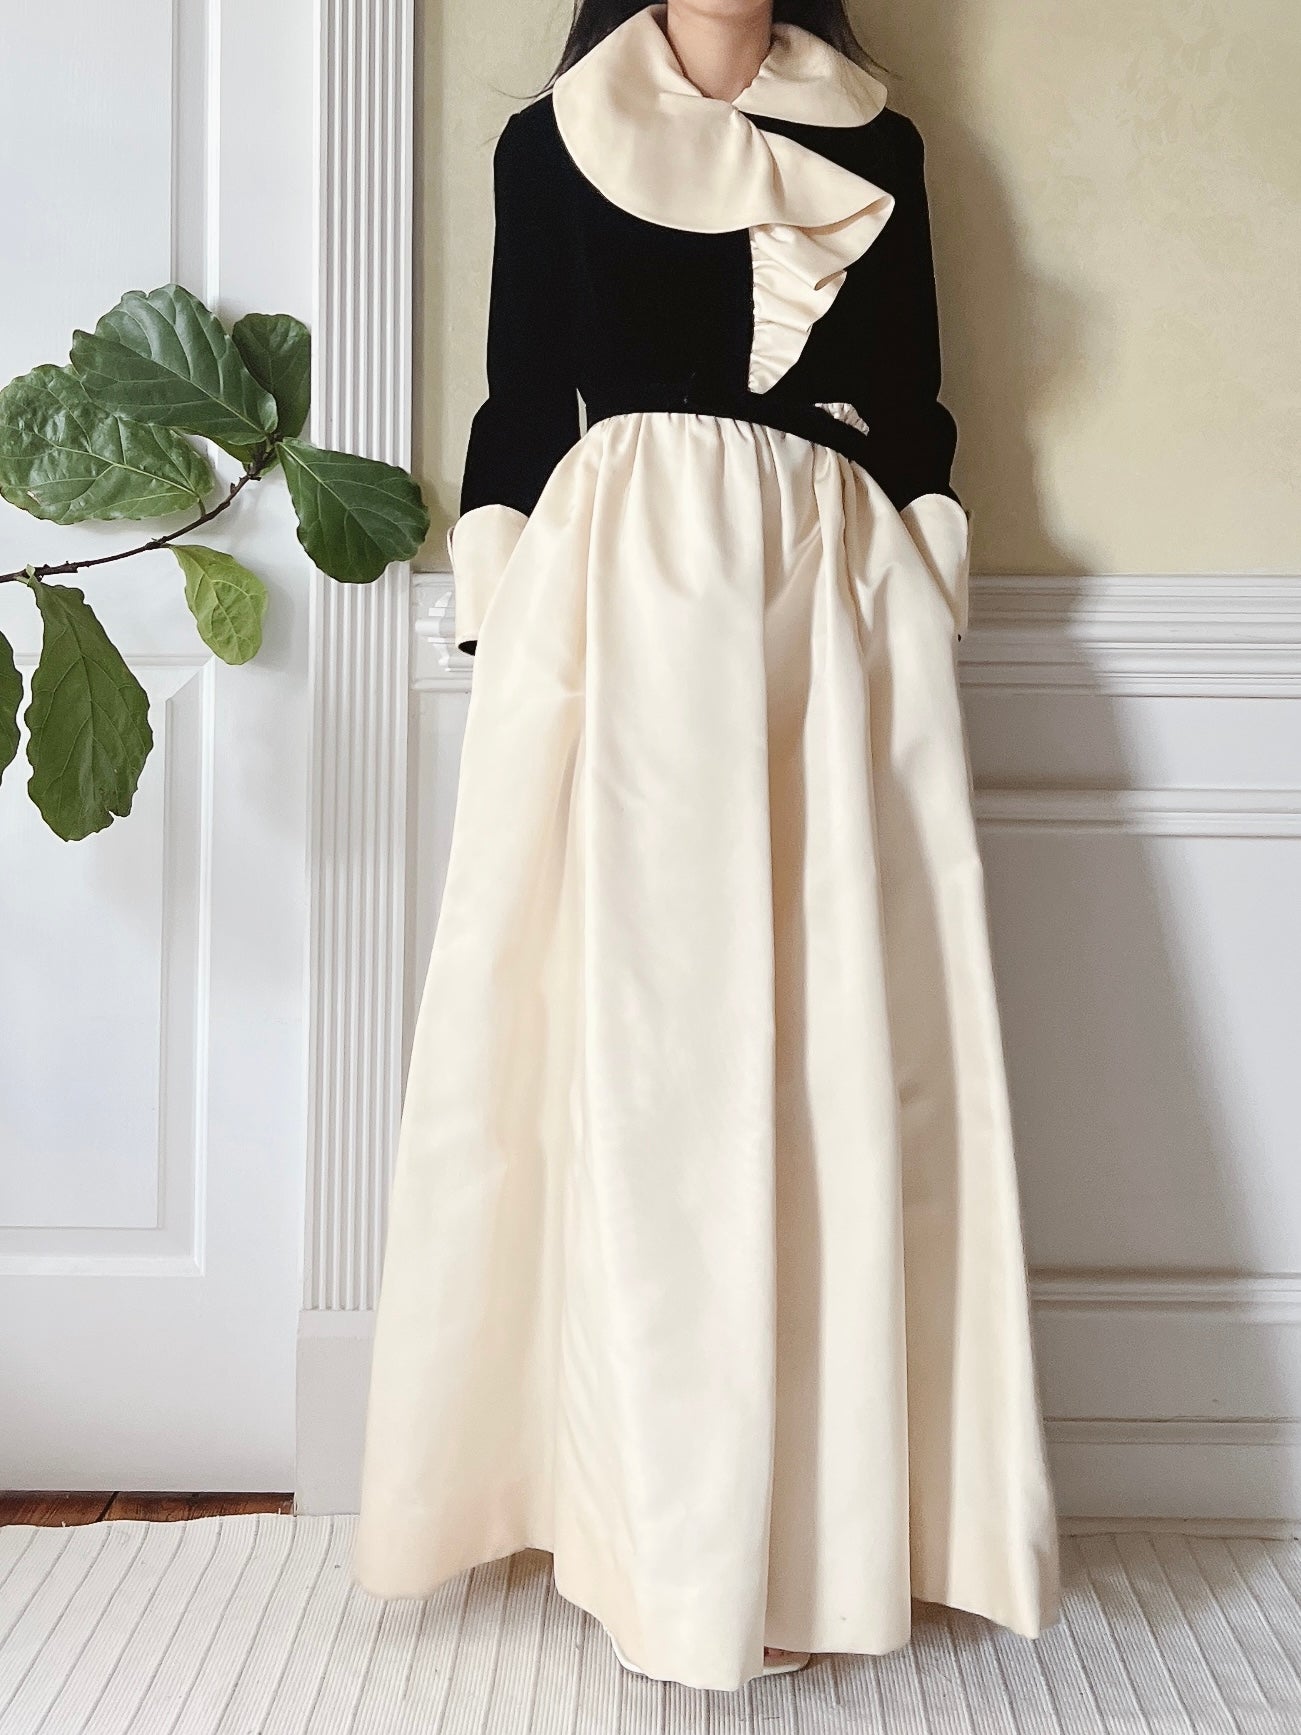 Vintage Geoffrey Beene Satin and Velvet Dress - XS